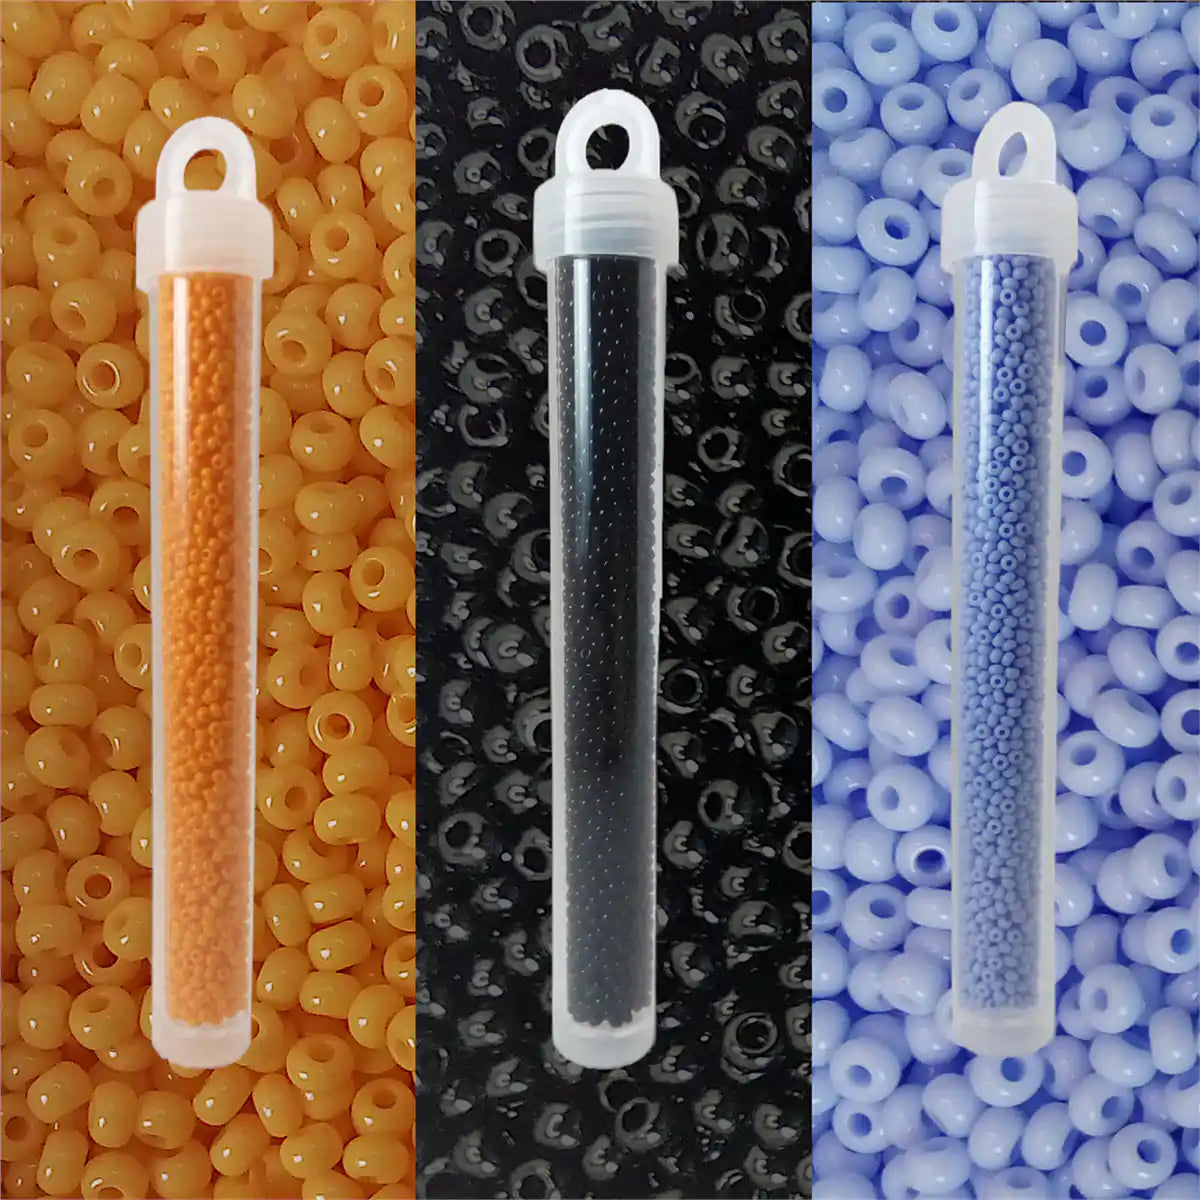 Glass seed beads 3 pack orange black blue 66 grams size 10